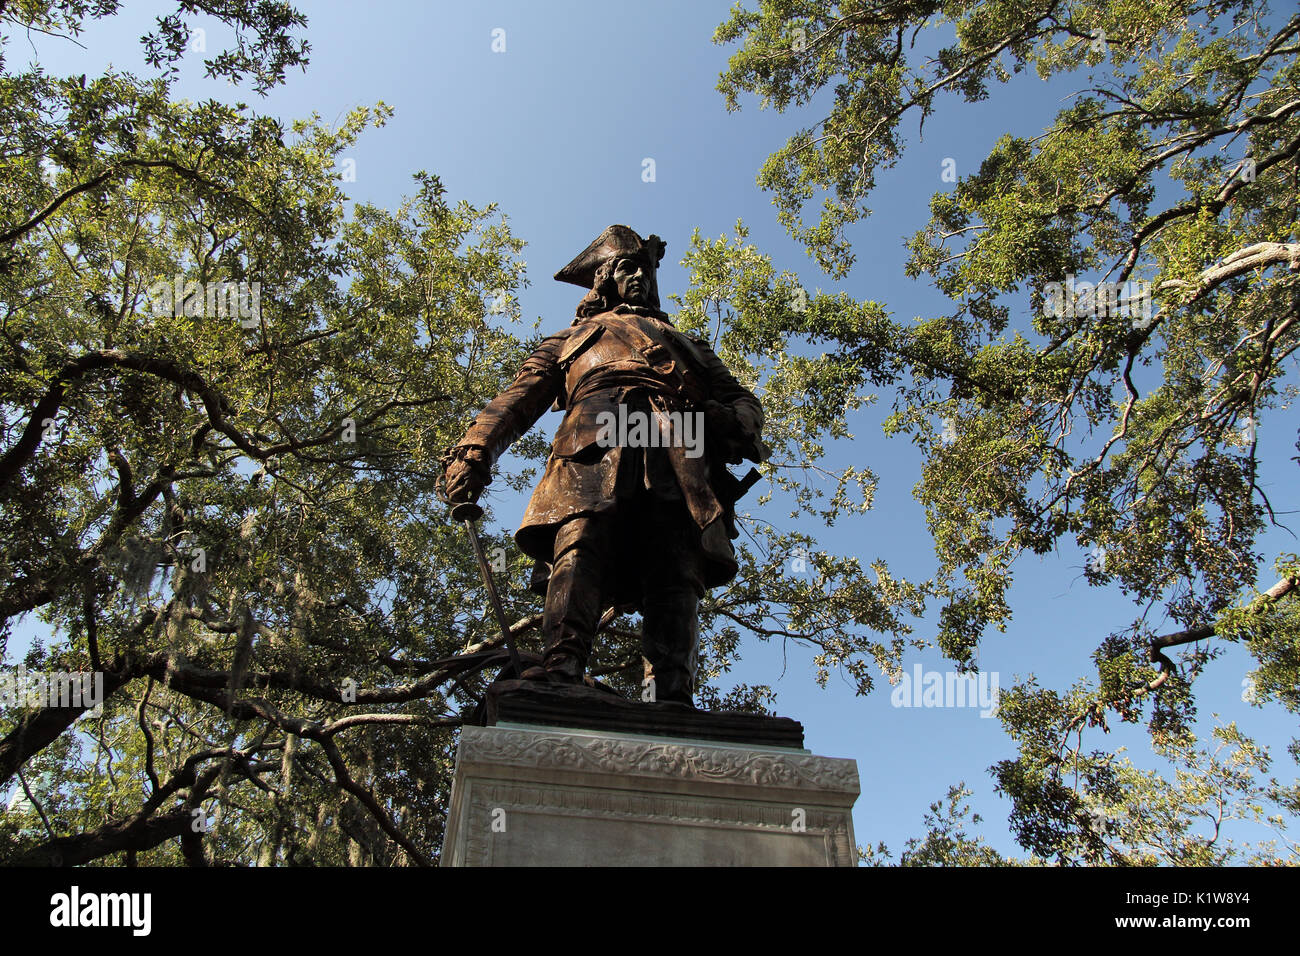 SAVANNAH, GA - 22 de julio: El imponente monumento James Oglethorpe preside Chippewa Square Julio 22, 2017 en Savannah, Georgia Foto de stock